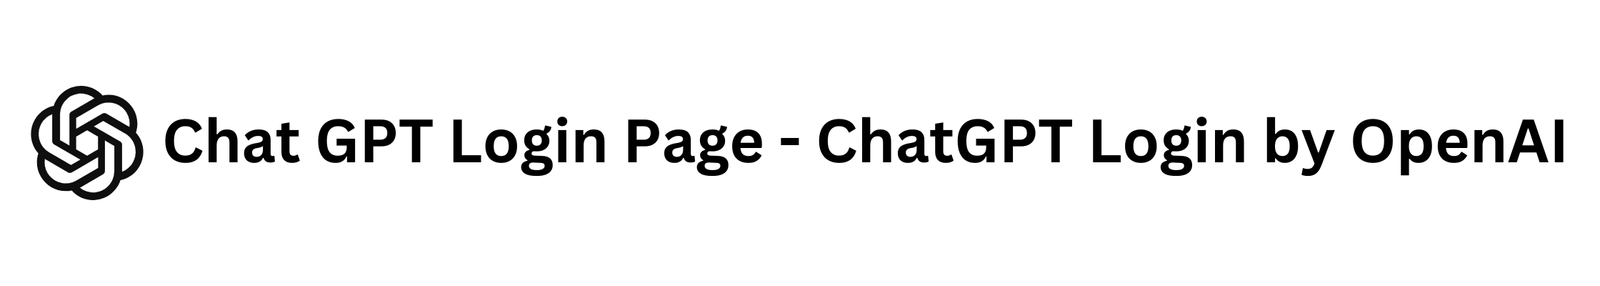 Chat GPT Login Page - ChatGPT Login by OpenAI